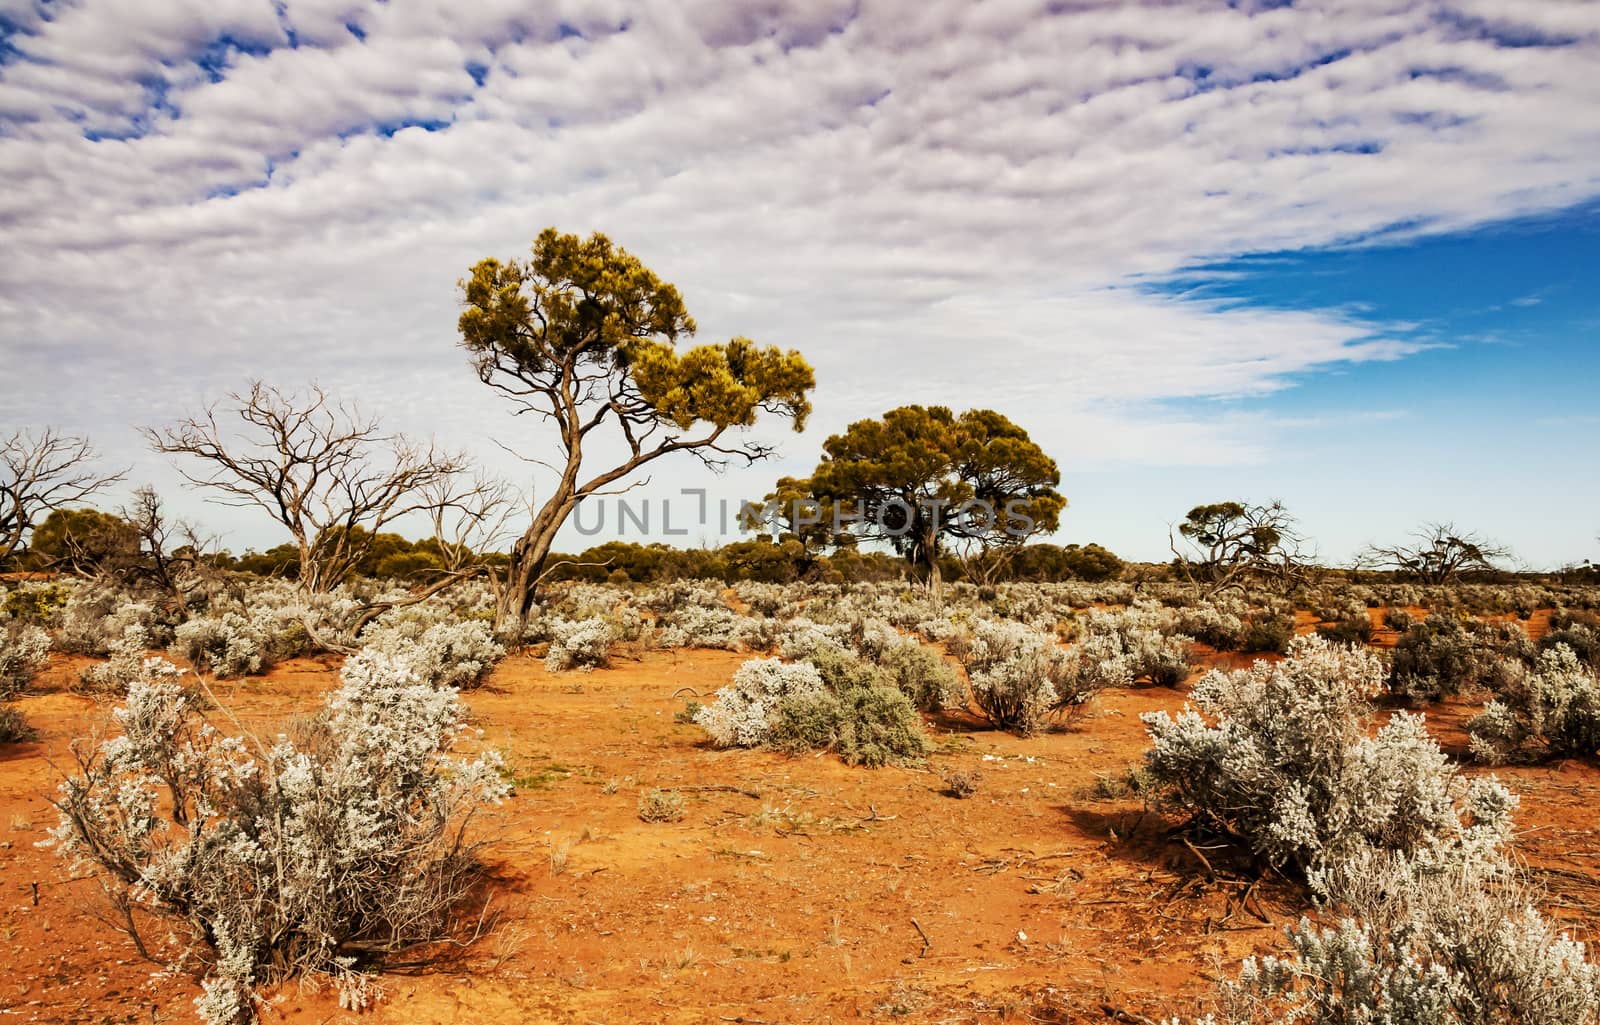 The Australian desert, the outback by edella